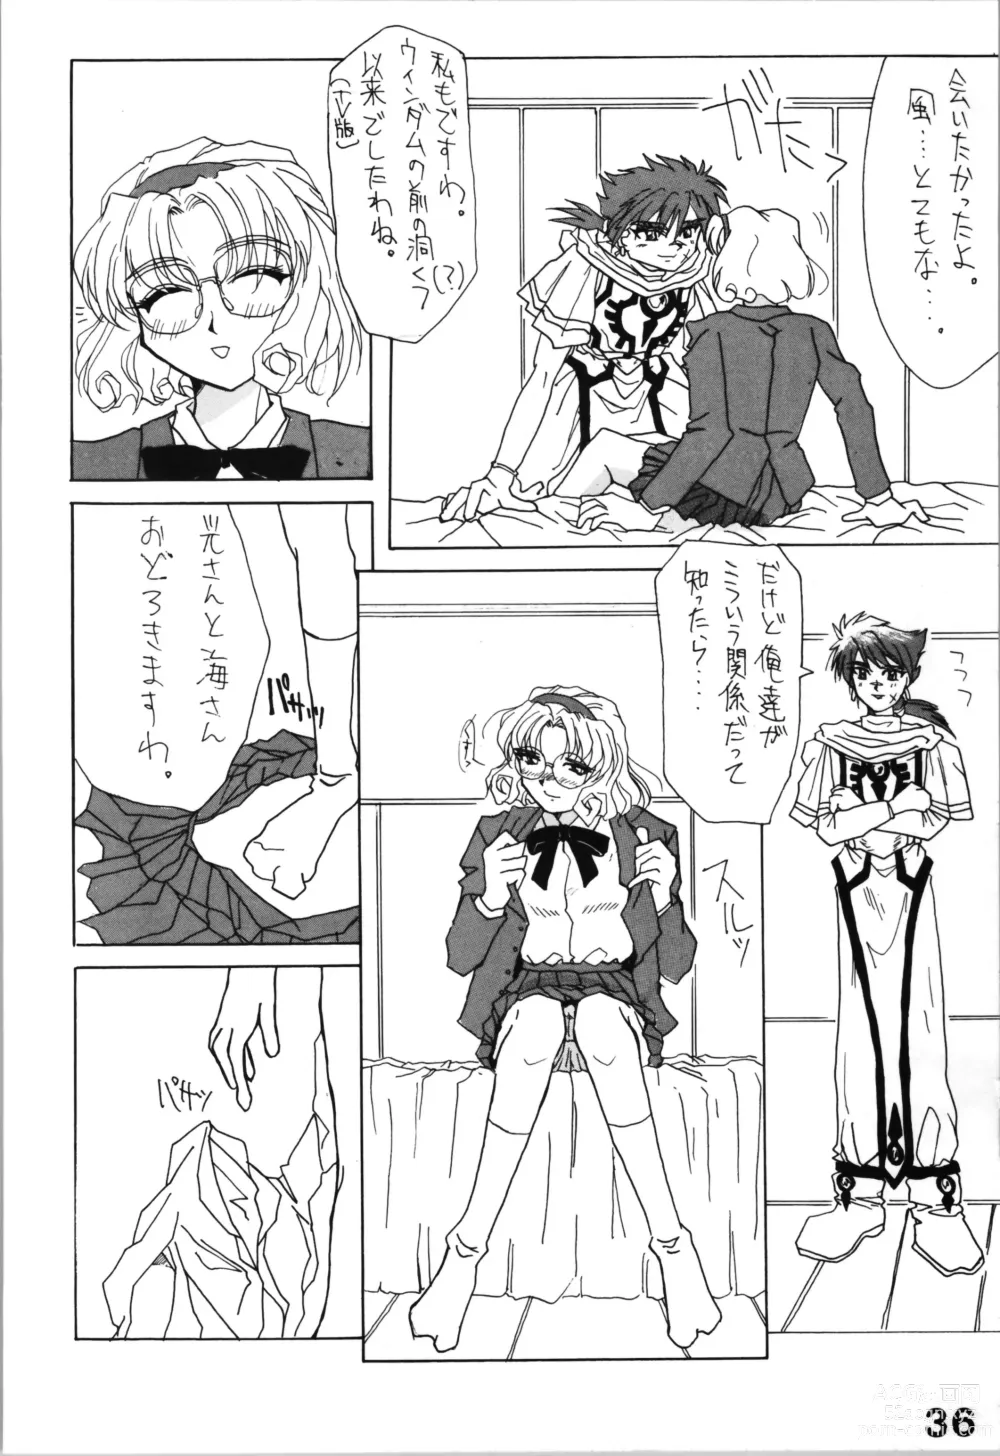 Page 36 of doujinshi [ACTIVA